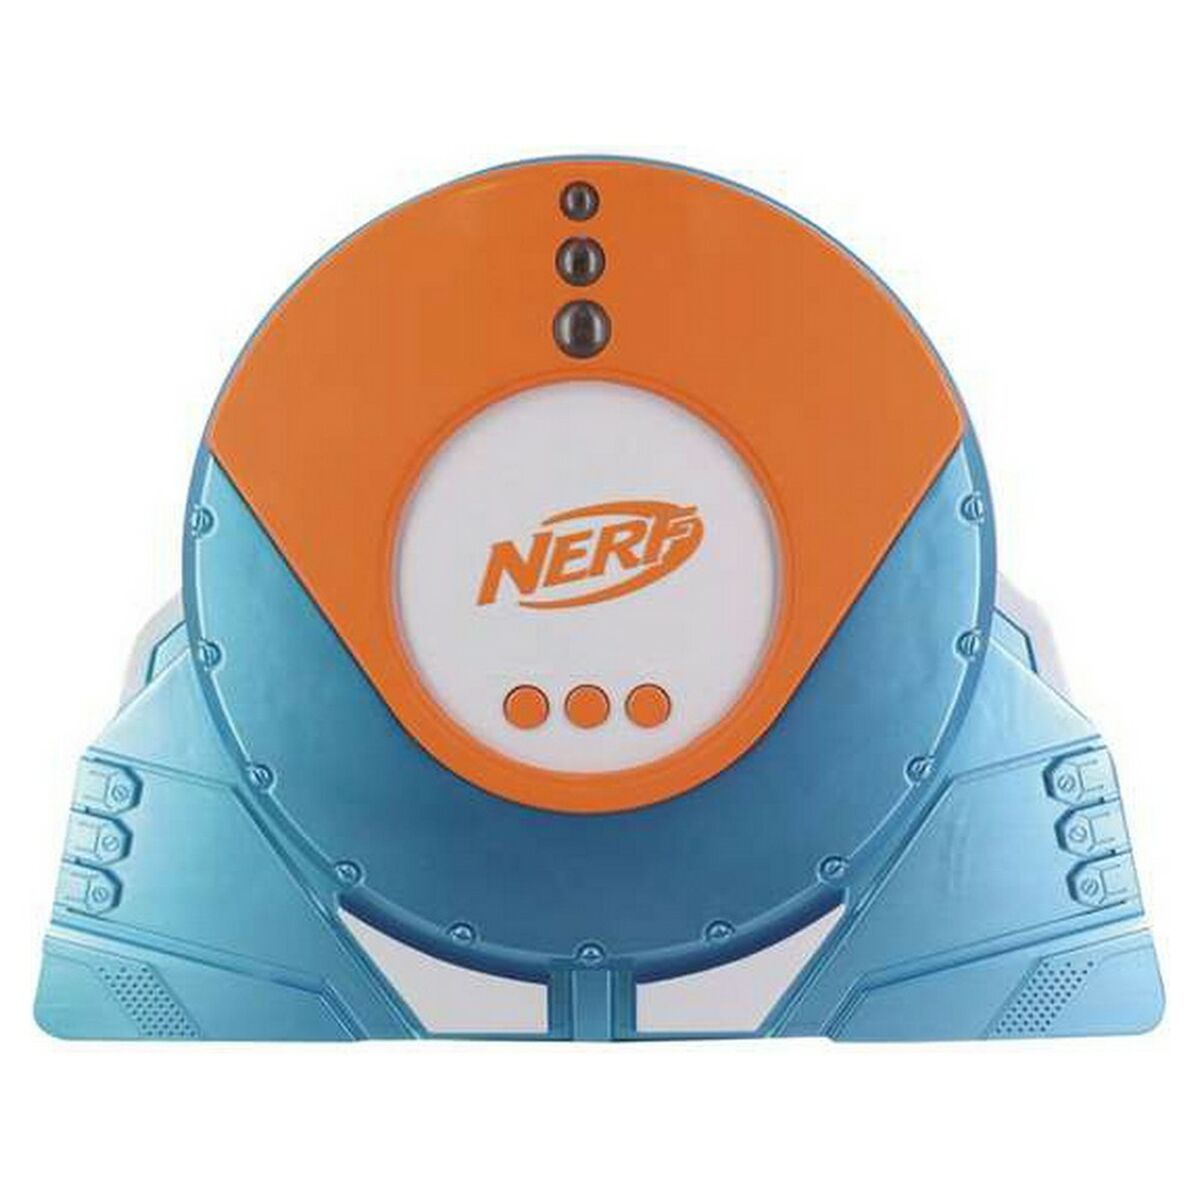 Set Skeet Shot Disc Launcher Nerf (ES)-Leksaker och spel, Sport och utomhus-Nerf-peaceofhome.se